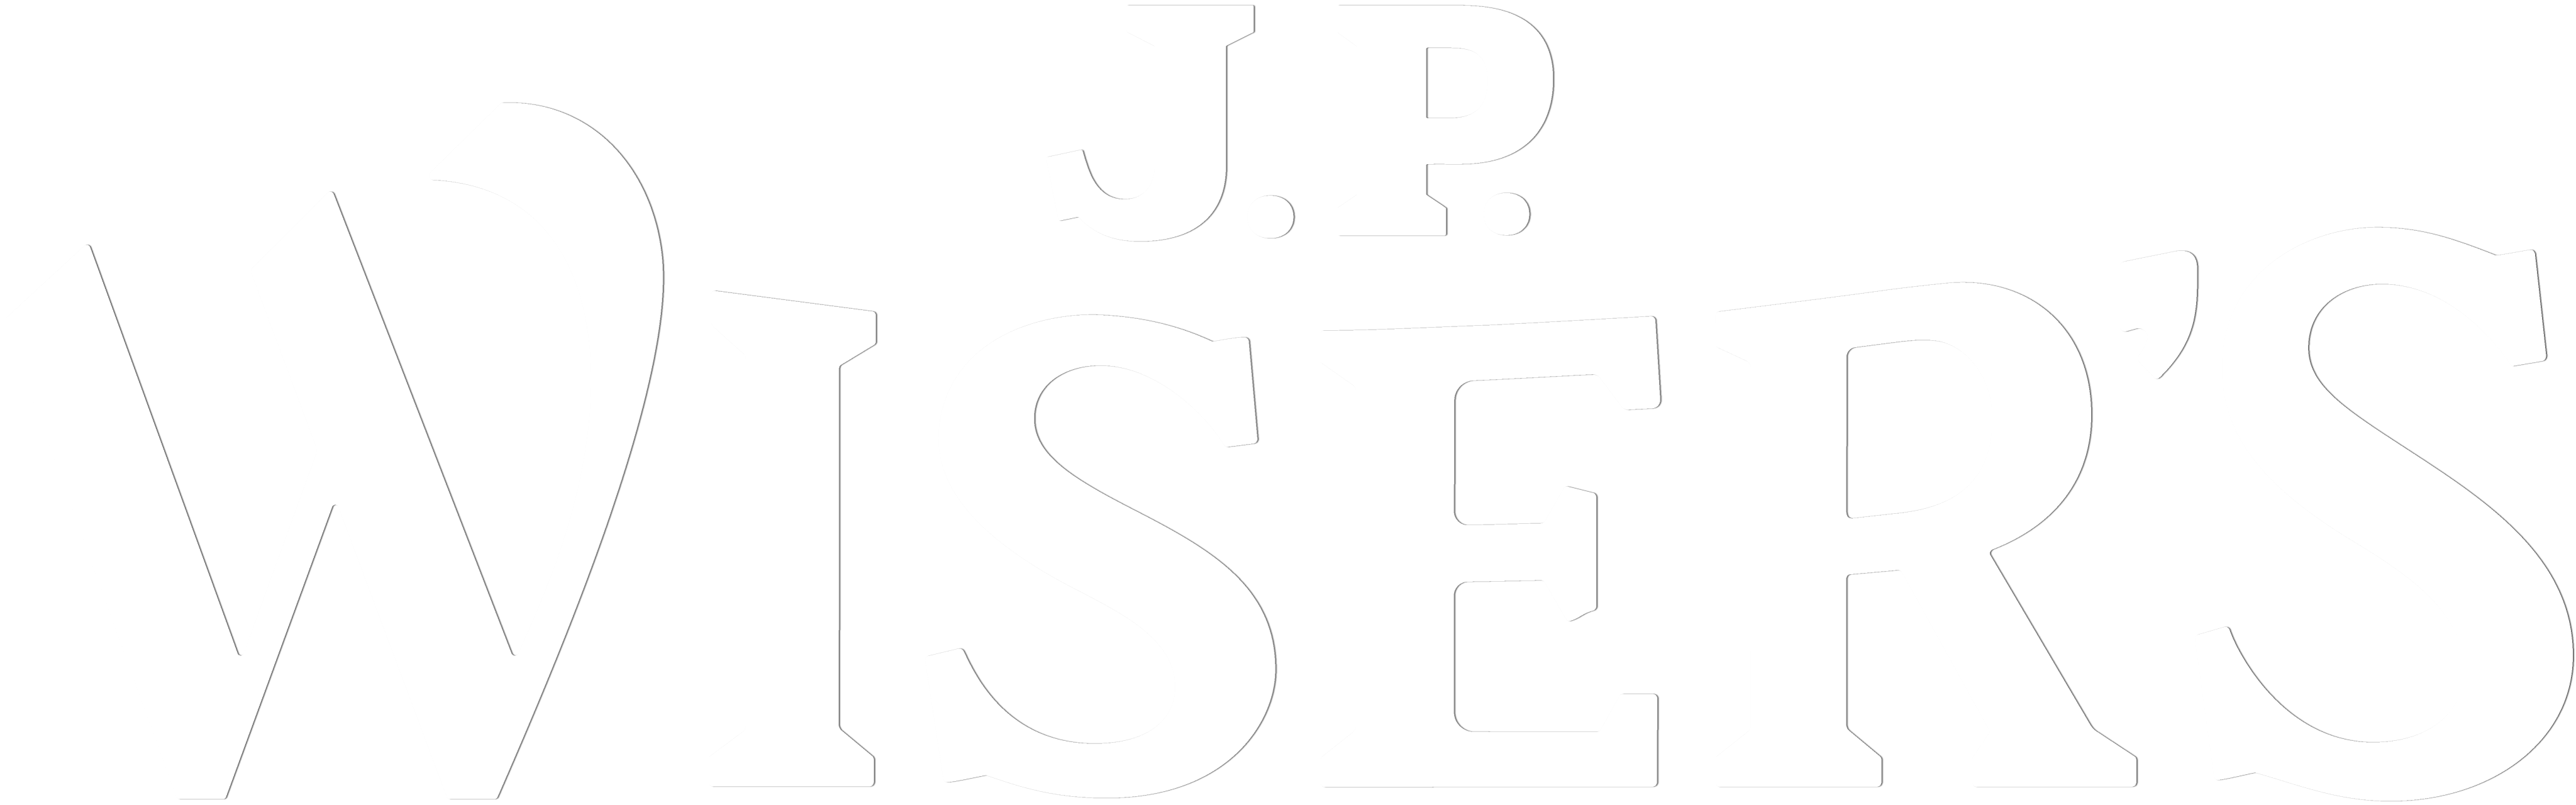 Brand_JpWiser_logo_white